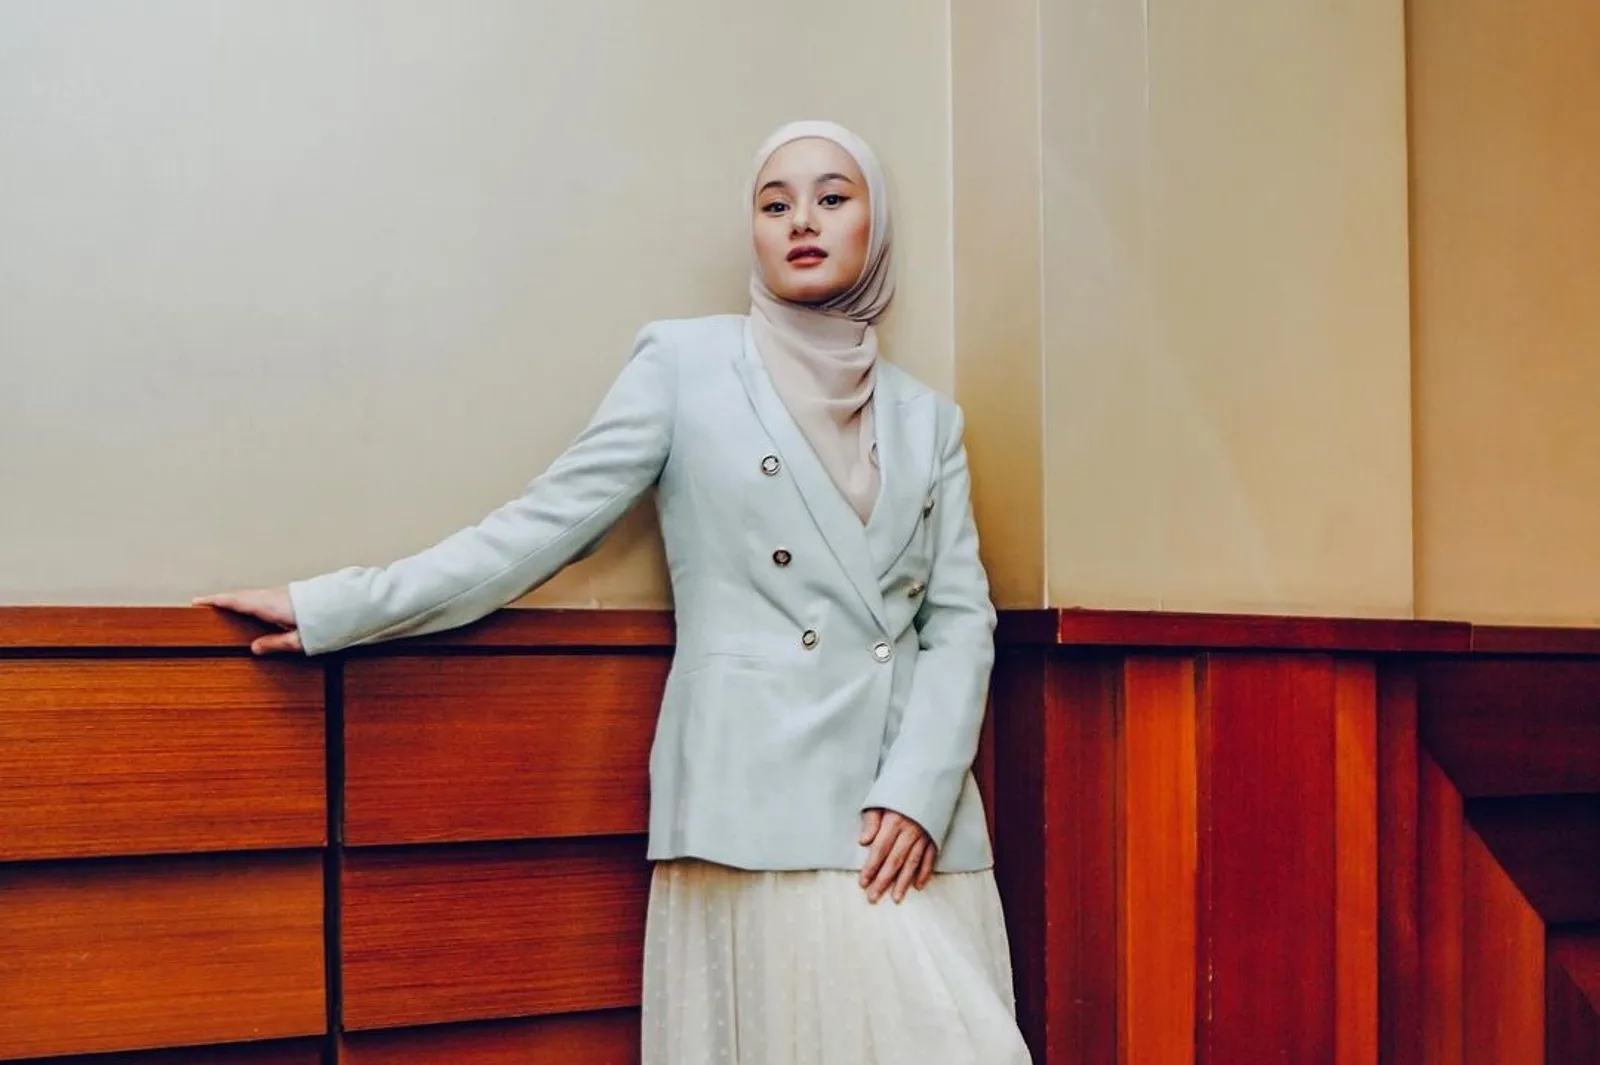 Referensi Outfit Hijab untuk Office Look a La Seleb Tanah Air